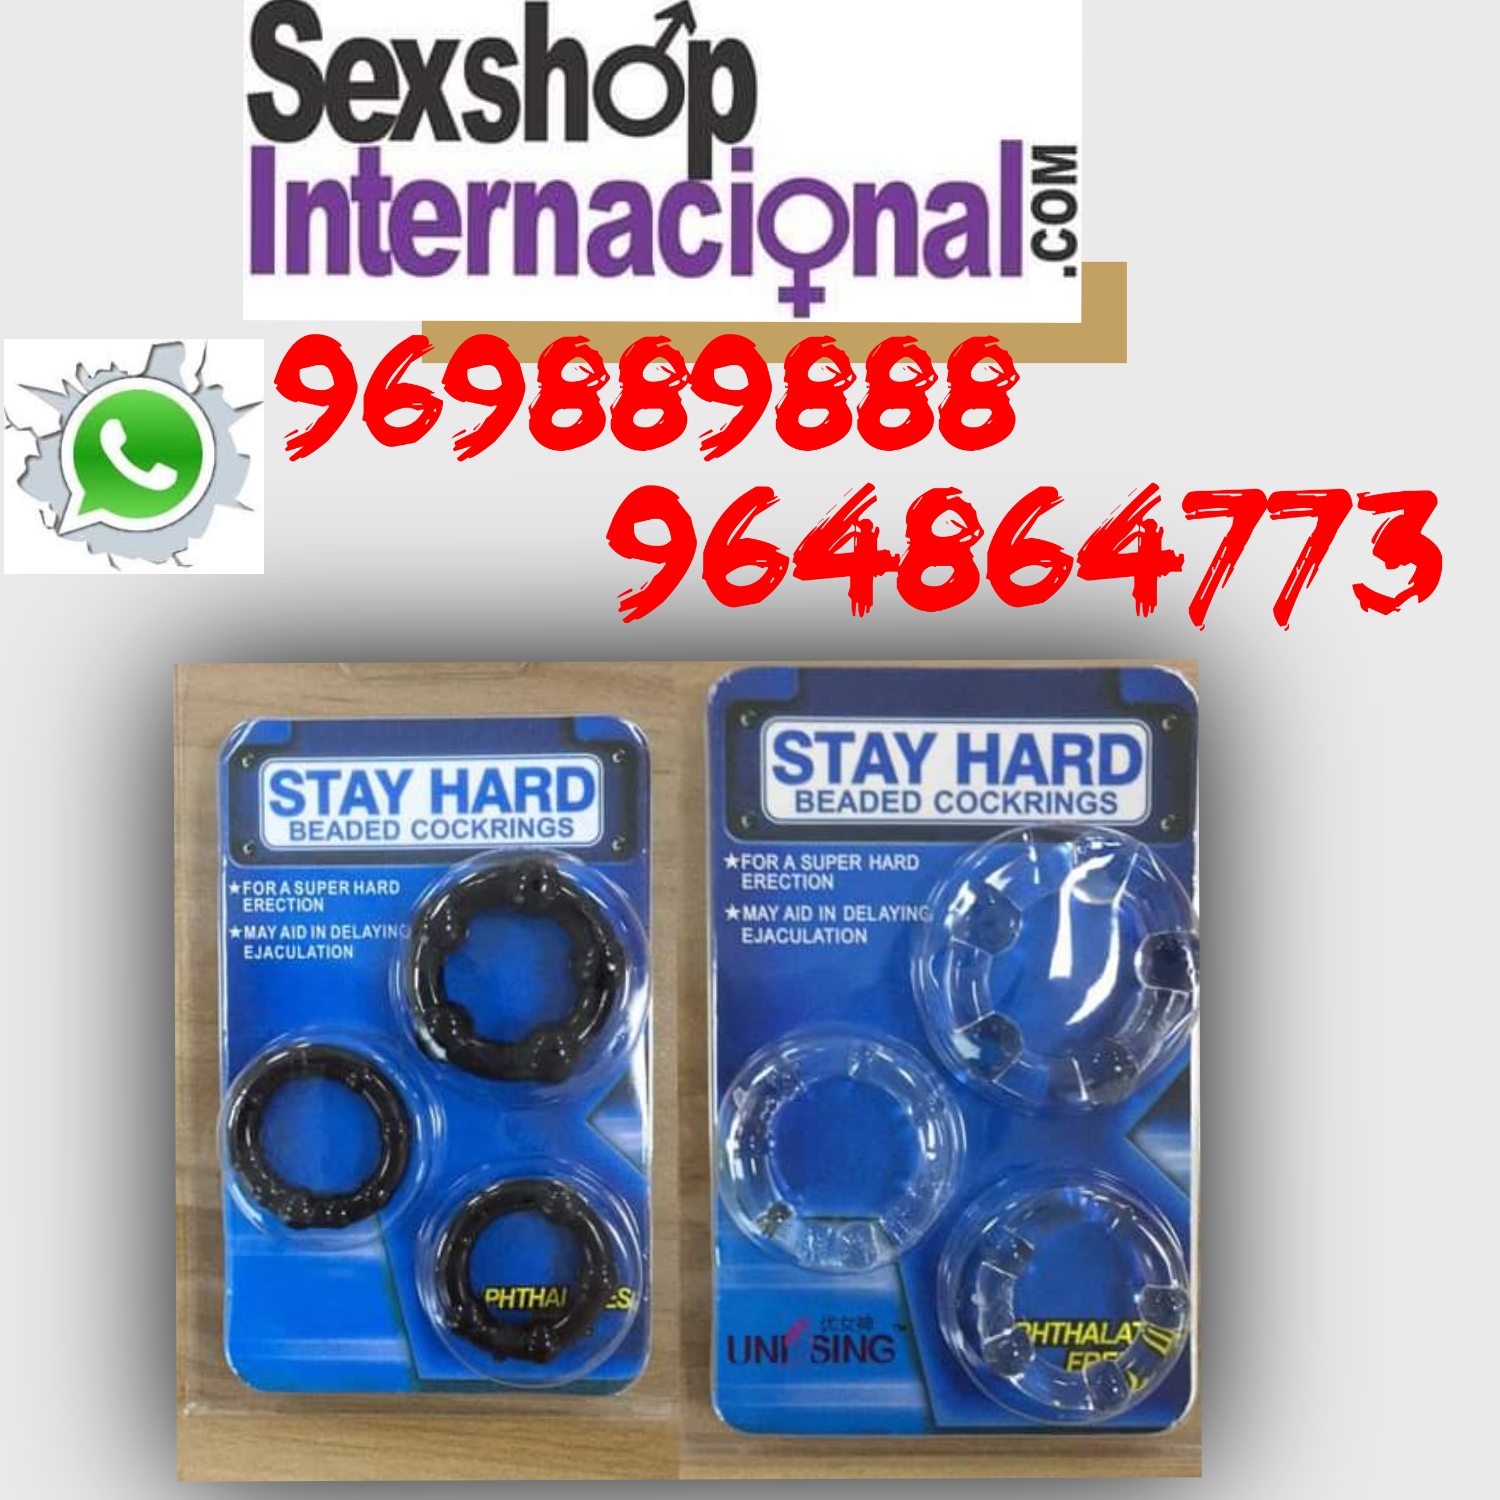 anillos kit retarda-engrosa-prolonga la eyaculacion-de silicona-stay hard-sexshop lima 971890151